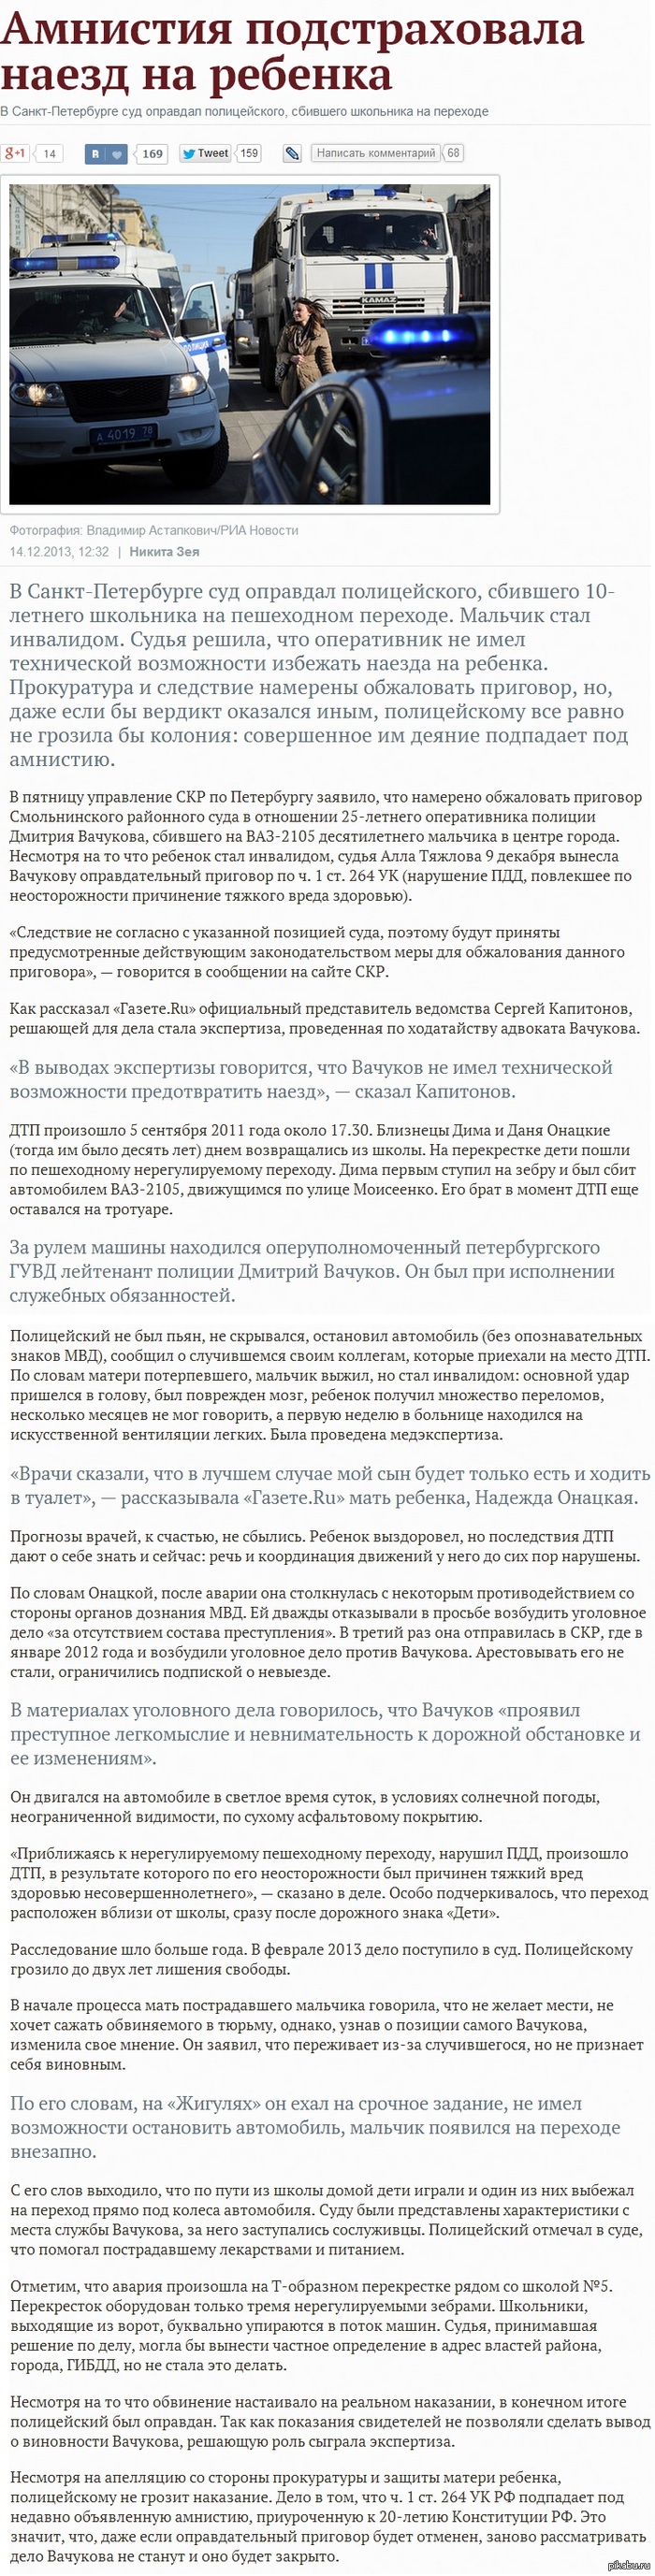  -   ,     : http://www.gazeta.ru/auto/2013/12/13_a_5802613.shtml